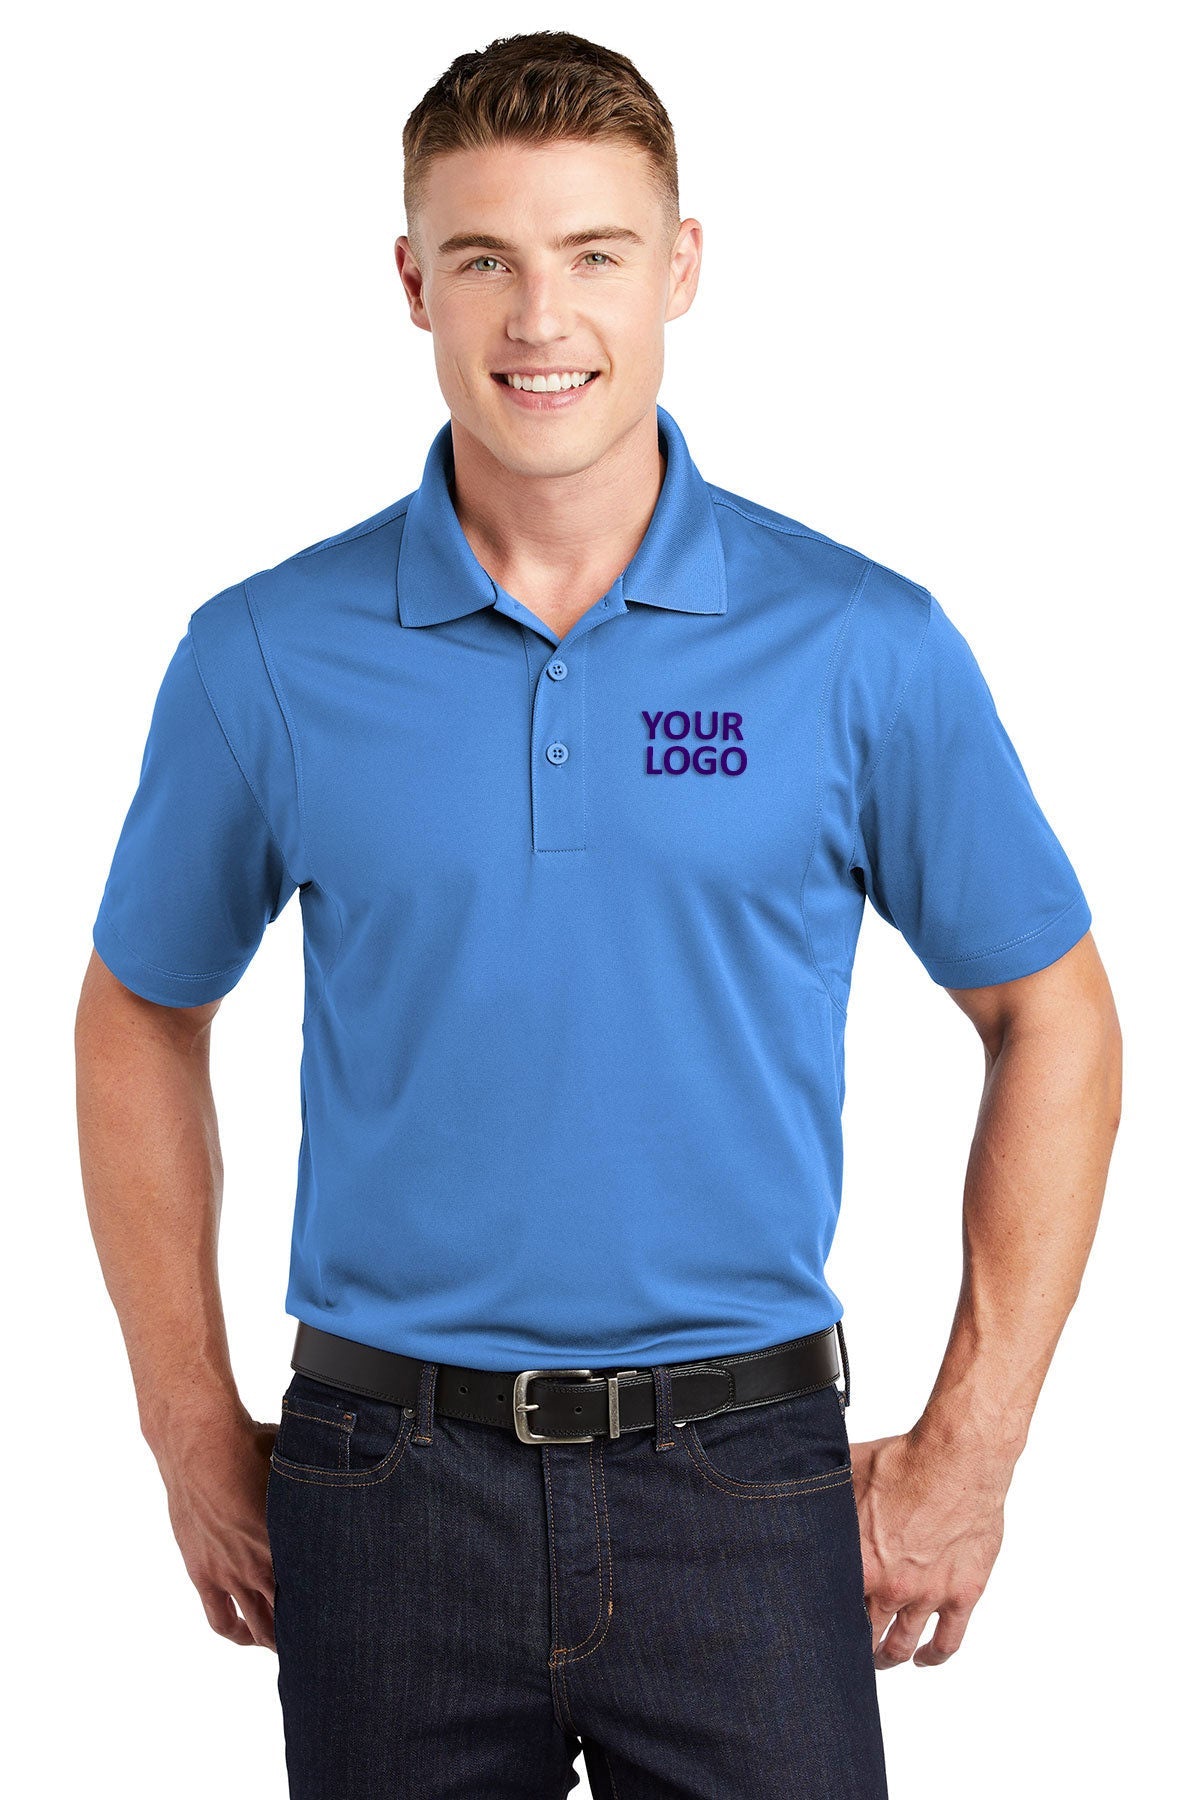 Sport-Tek Blue Lake TST650 business polo shirts embroidered